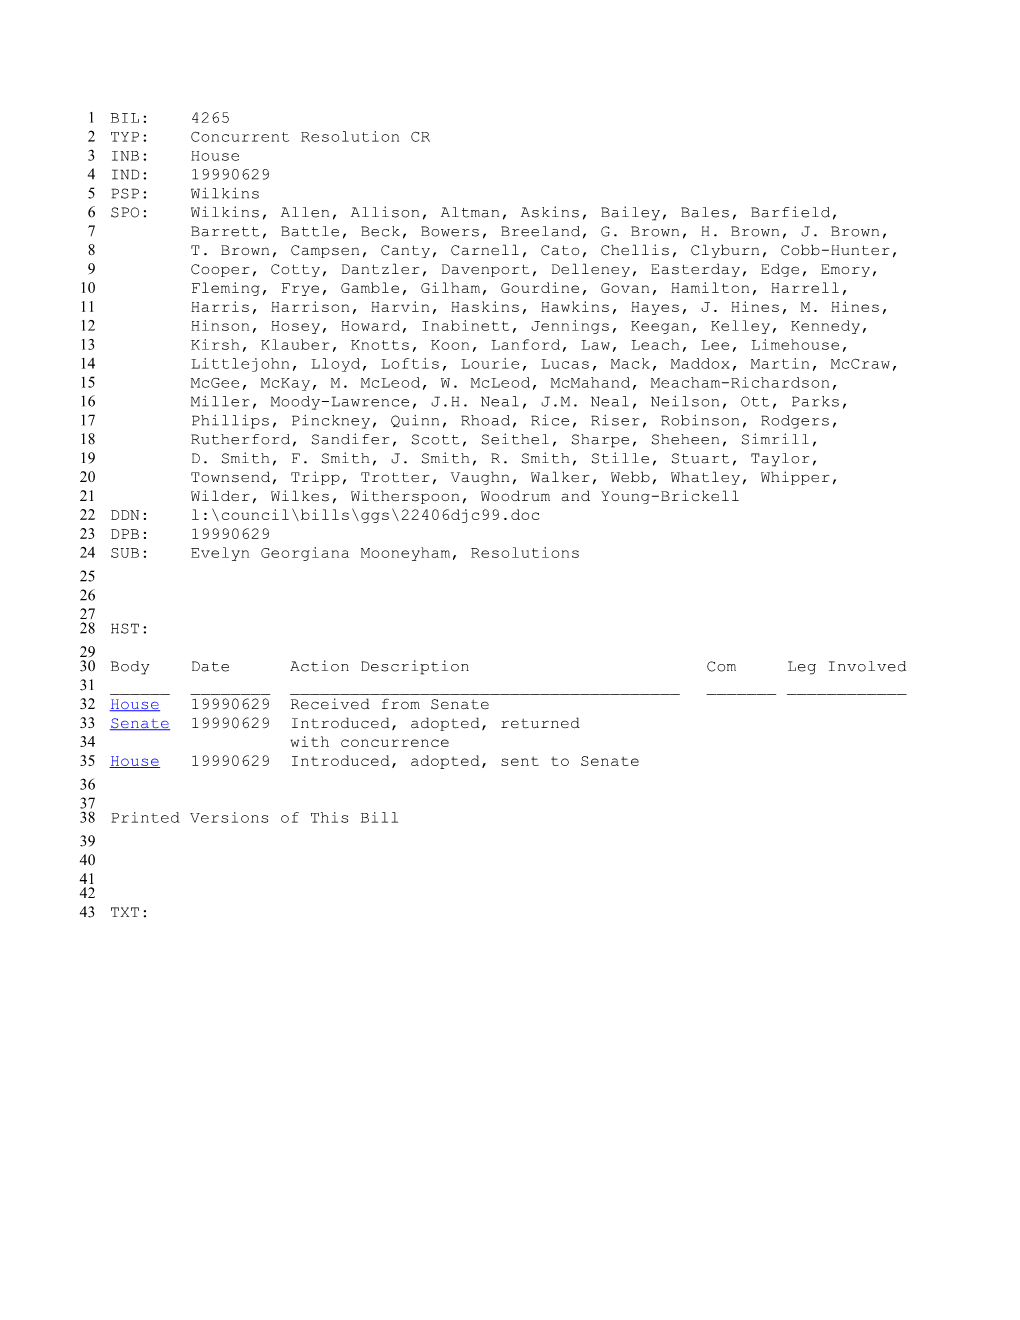 1999-2000 Bill 4265: Evelyn Georgiana Mooneyham, Resolutions - South Carolina Legislature Online